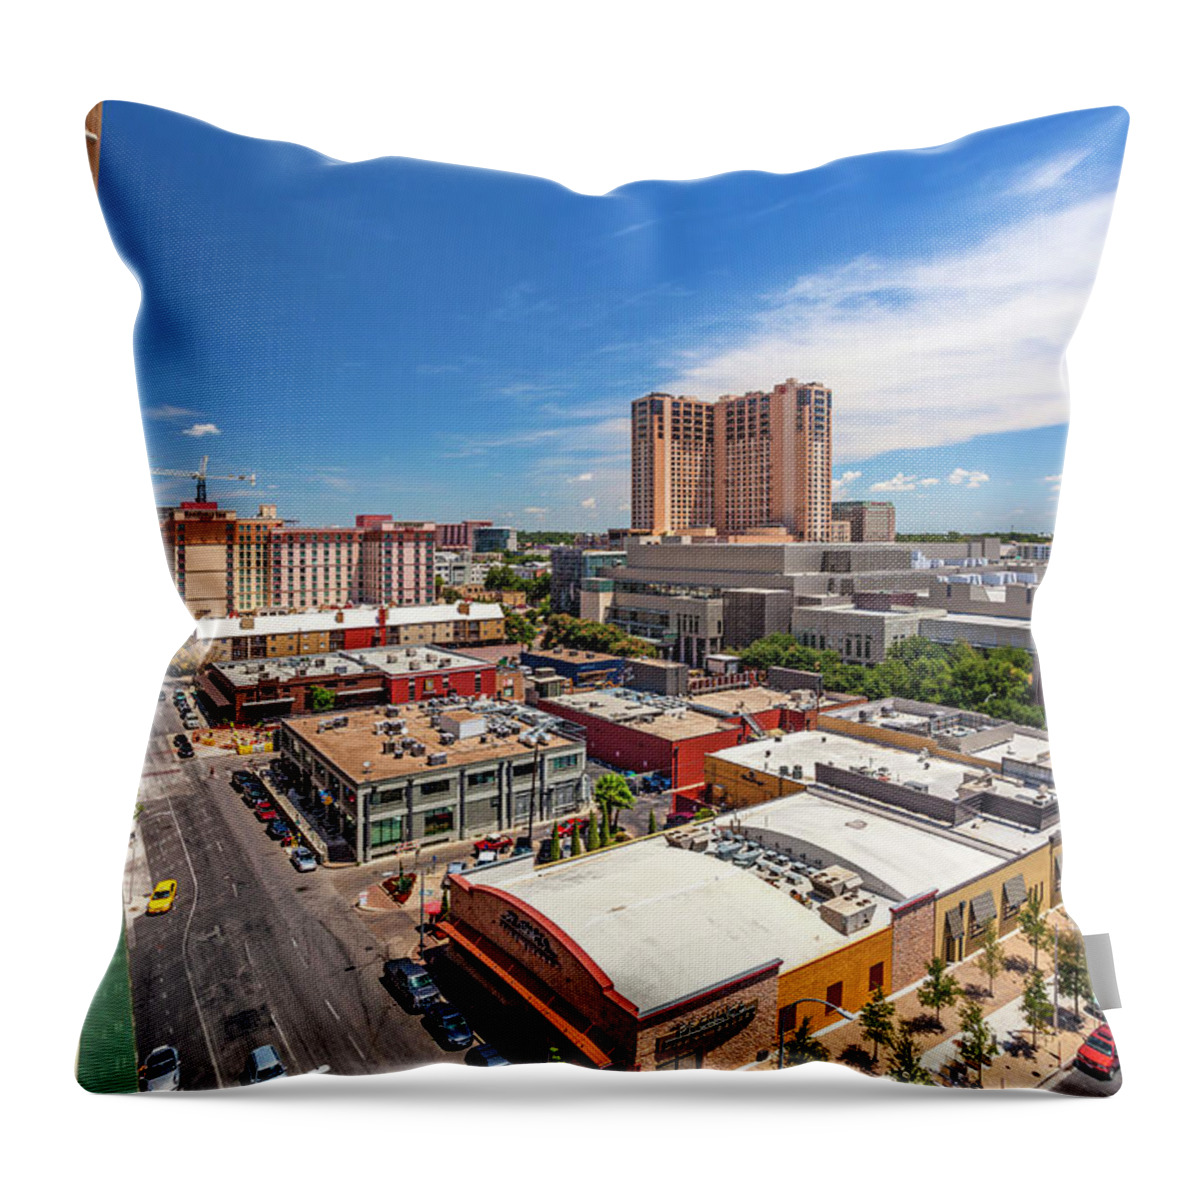 Estock Throw Pillow featuring the digital art Downtown Austin, Texas by Milton Photography